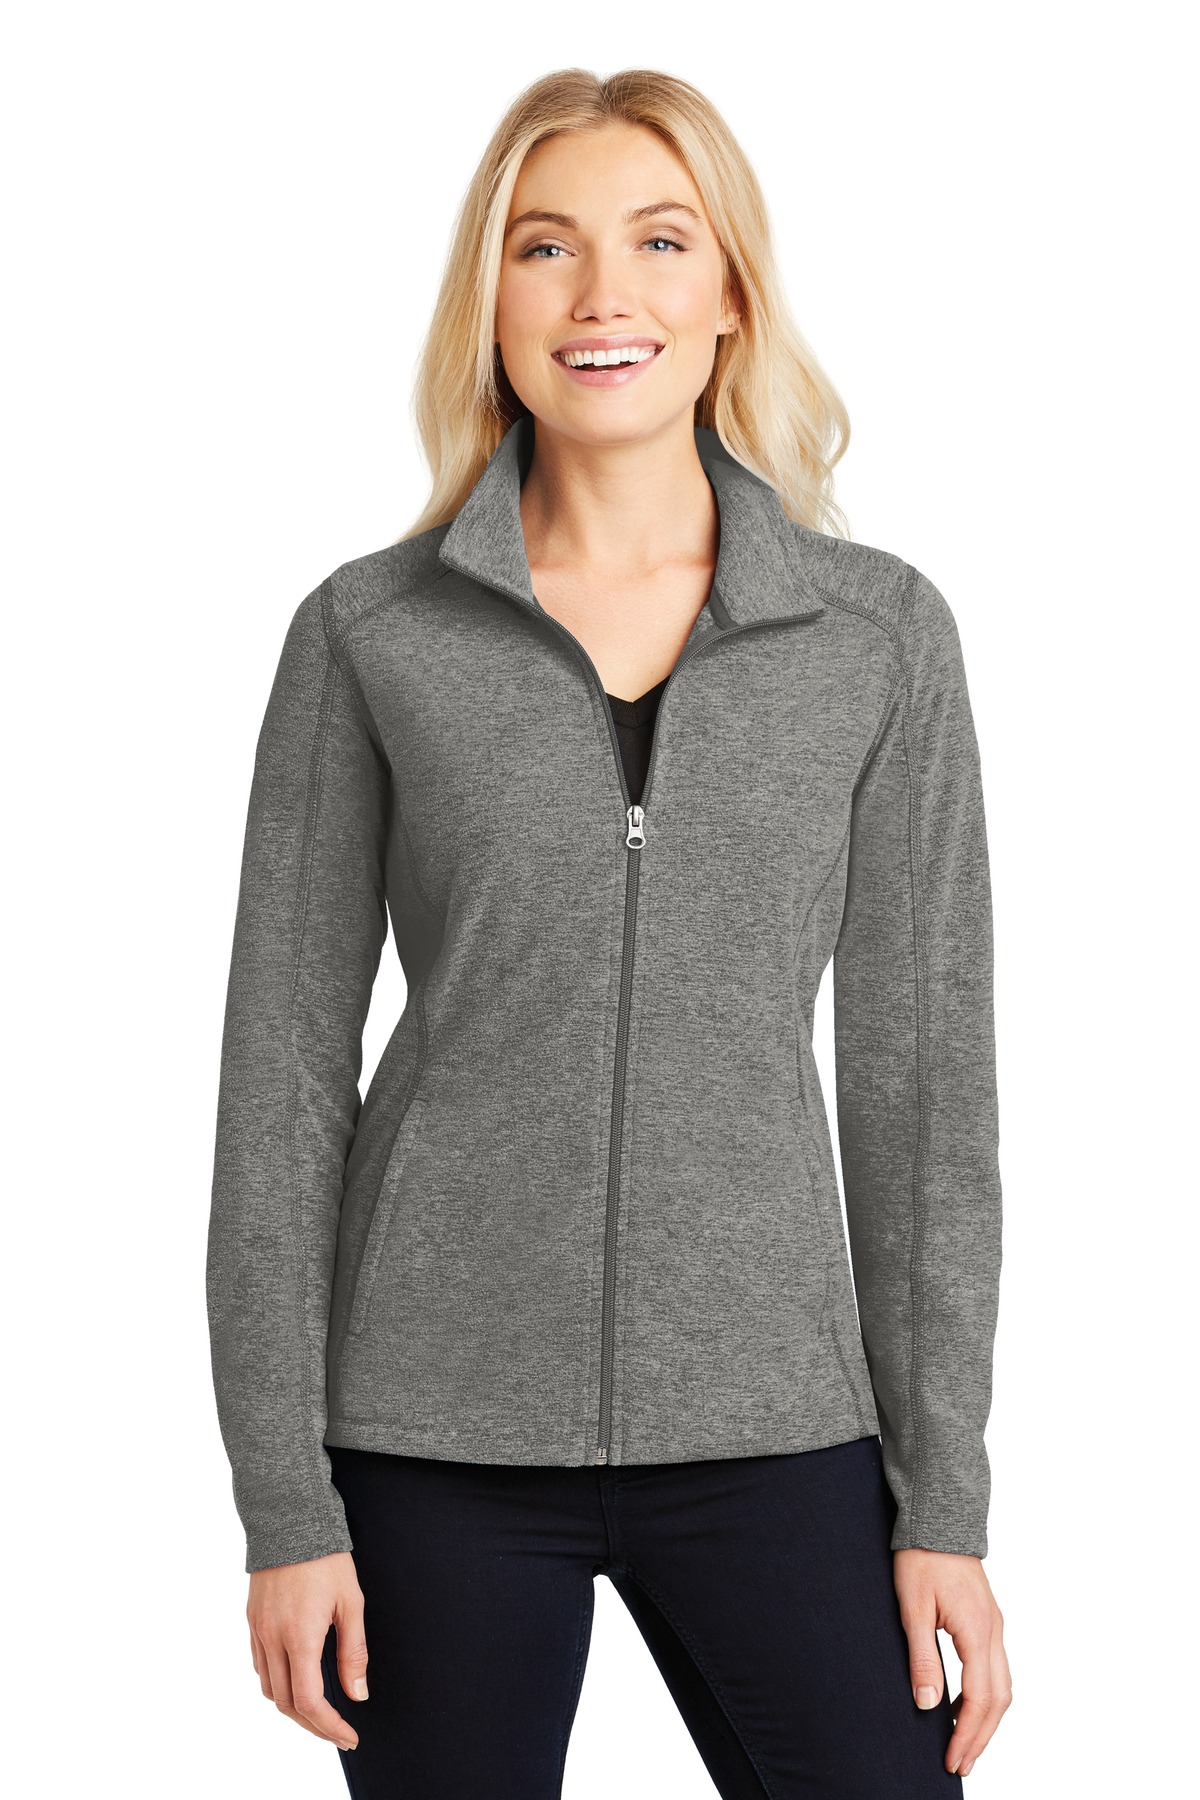 Port Authority® Ladies Heather Microfleece Full-Zip Jacket.-Port Authority